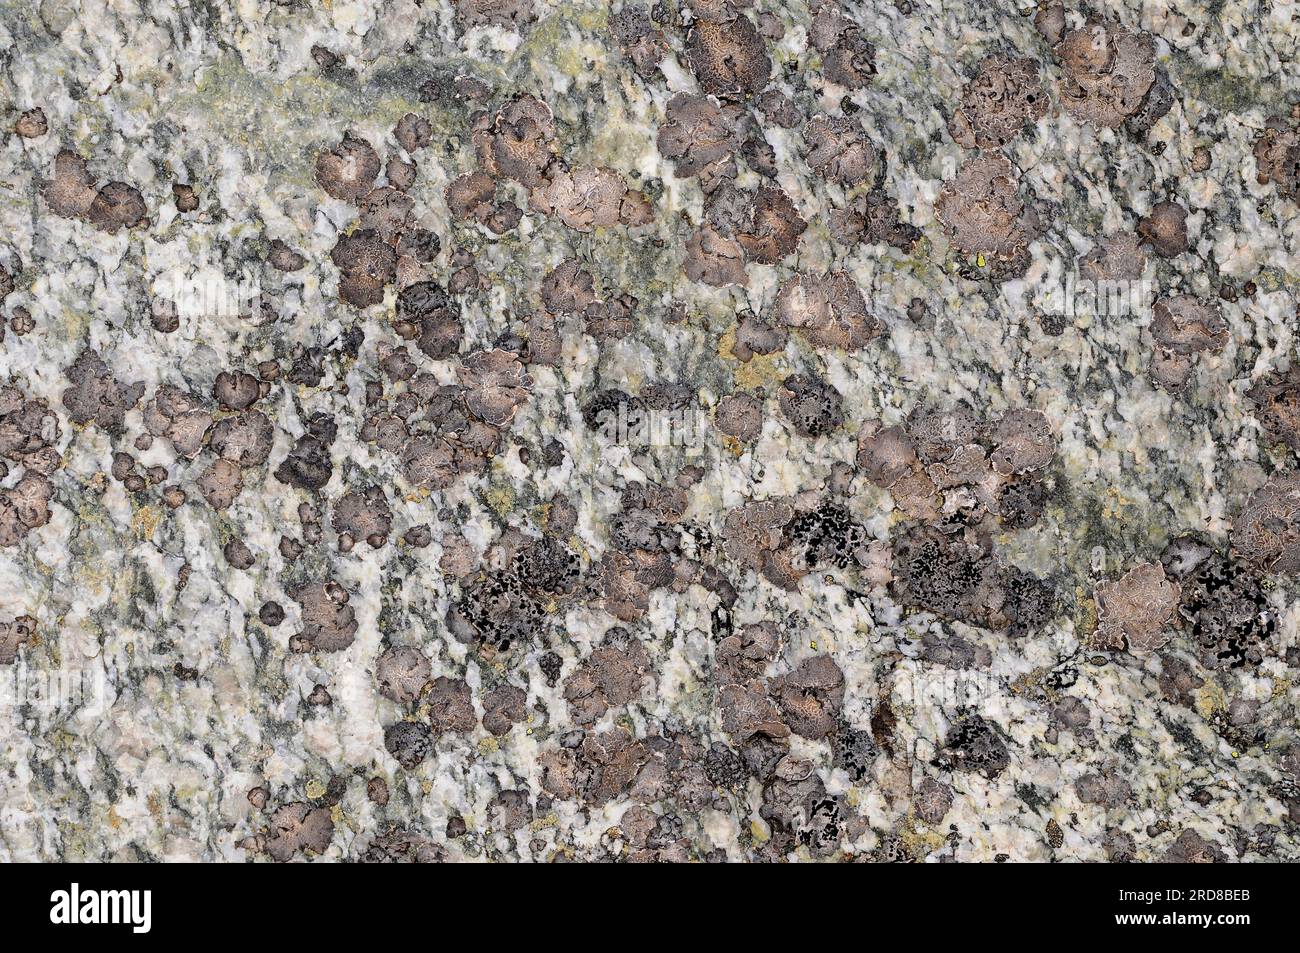 Rock tripe (Umbilicaria decussata) is an umbilicate lichen grey or brownish-grey that grow on siliceous rocks. Ascomycota. Umbilicariaceae. This photo Stock Photo